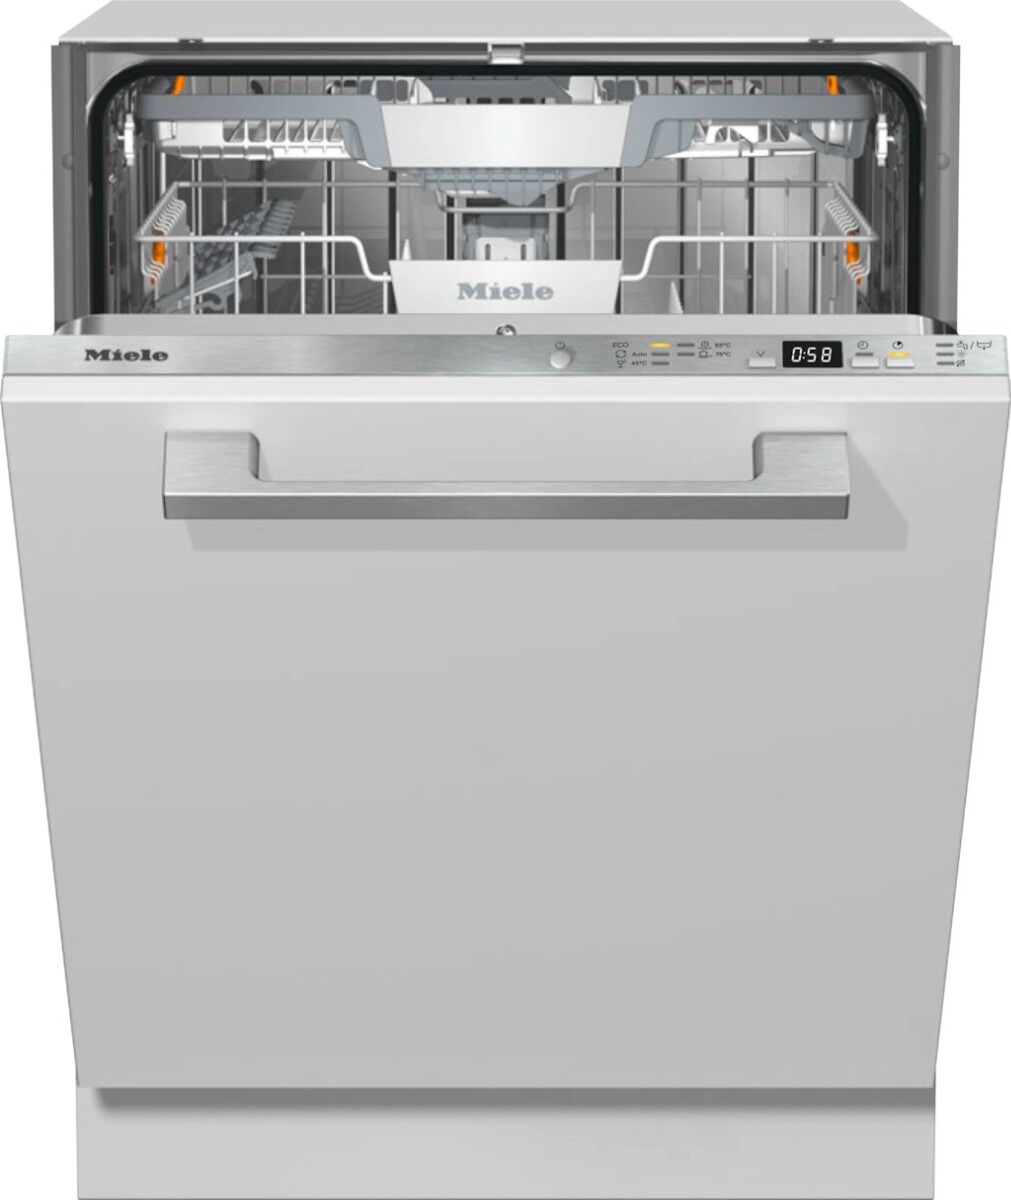 Miele G5350SCVI Built-In 60cm Dishwasher  Energy Class C - edst/clst